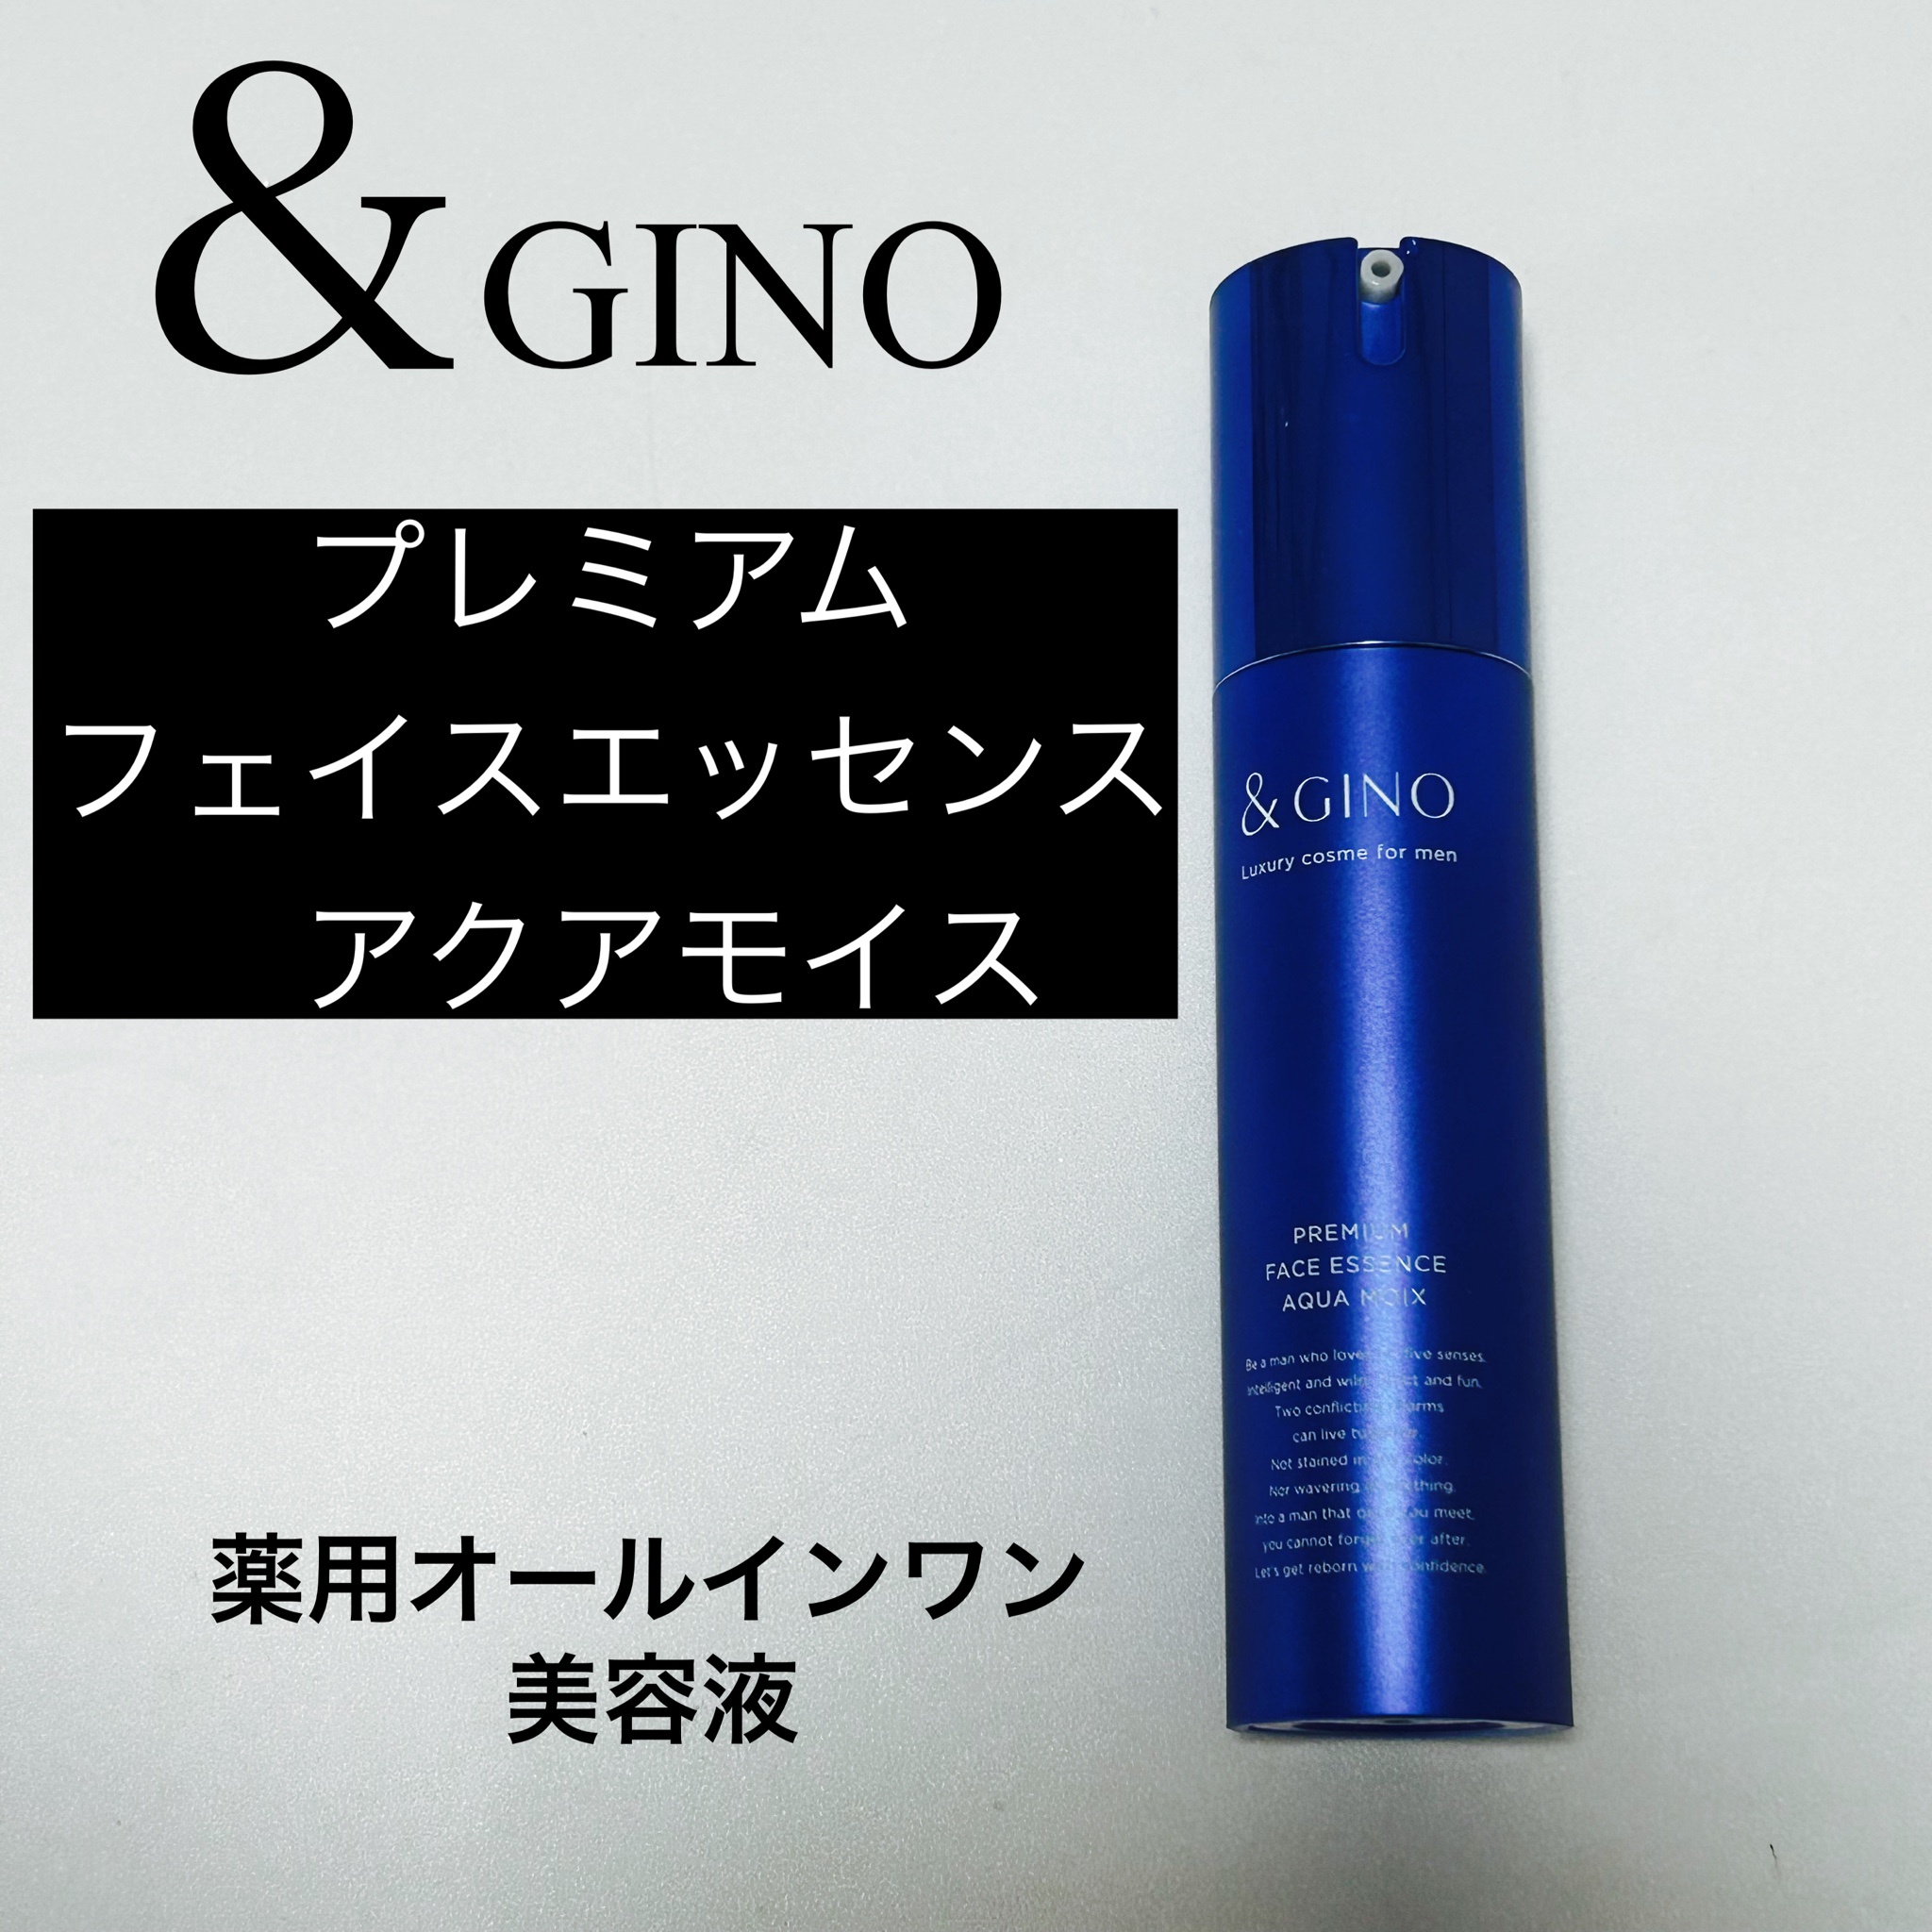 &GINO / PREMIUM FACE ESSENCE AQUA MOIXの商品情報｜美容・化粧品情報